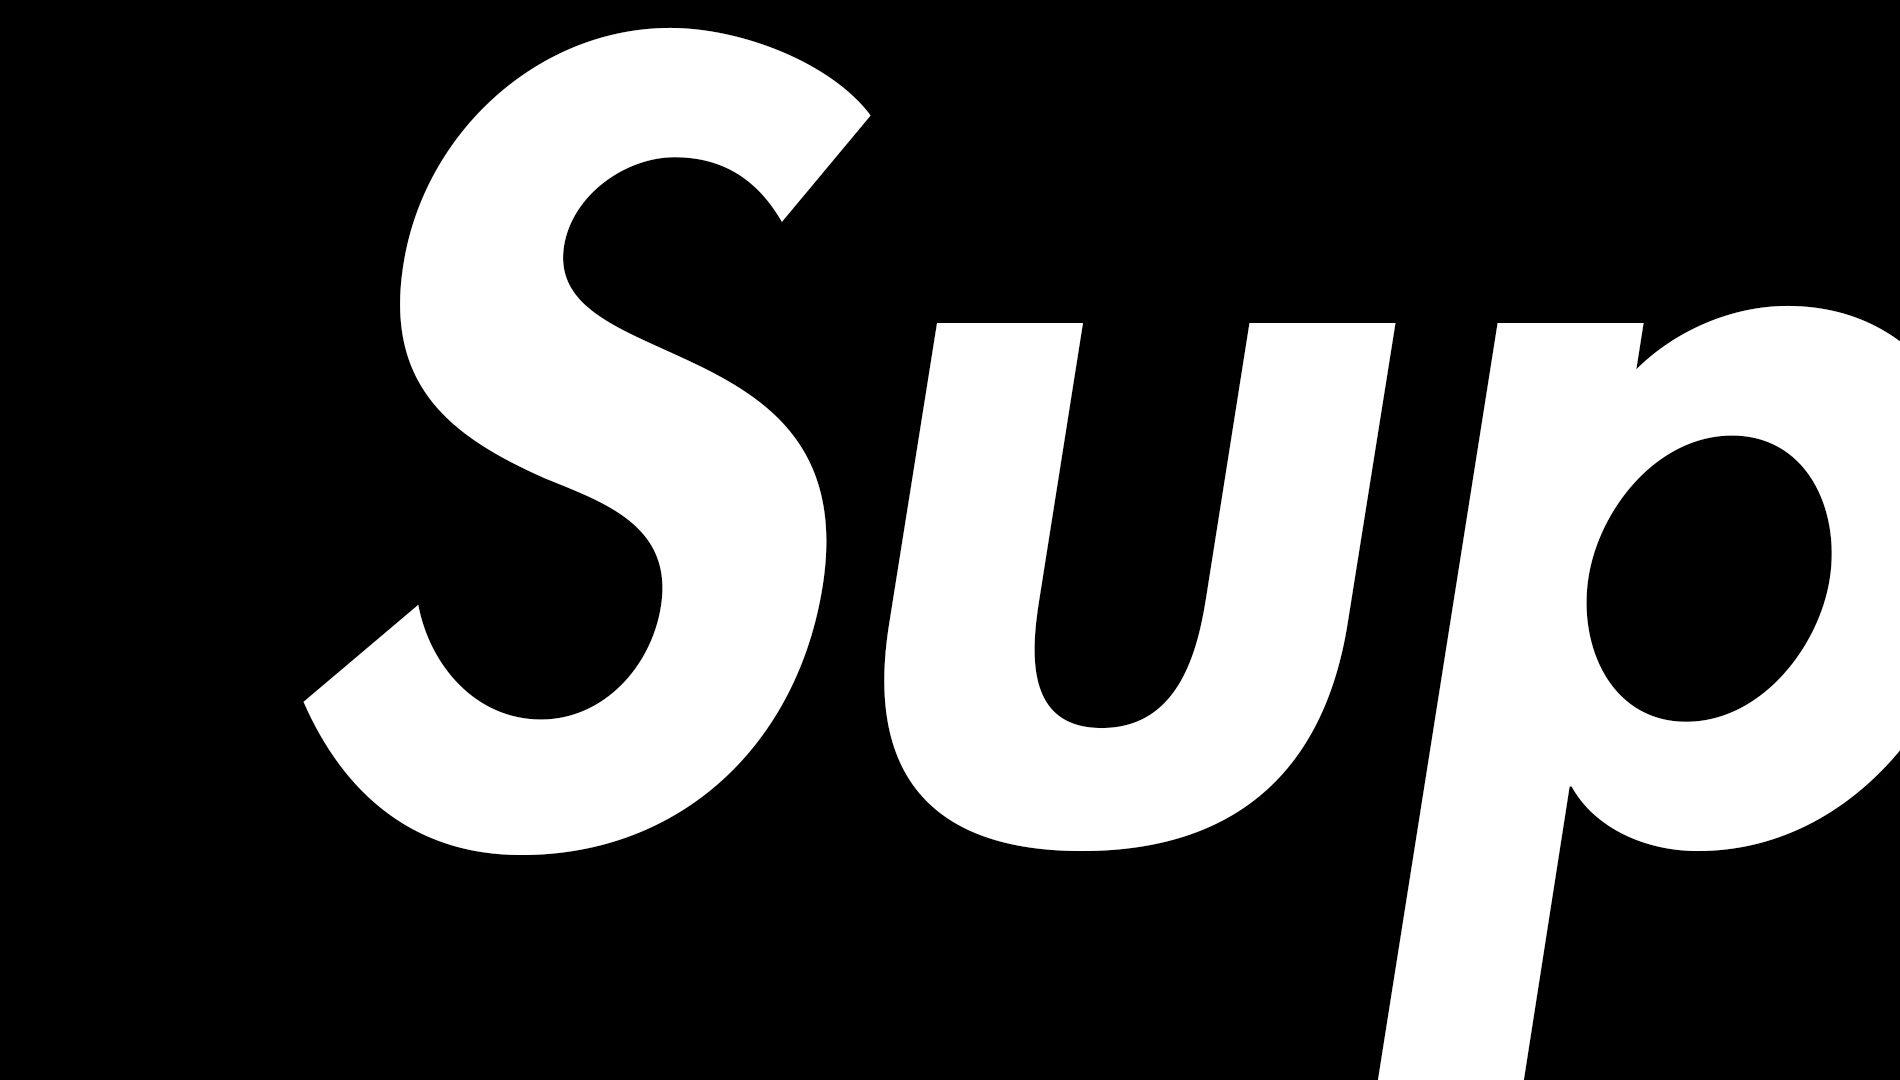 White Supreme Logo - Black And White Supreme Clothing Brand Logo Wallpaper